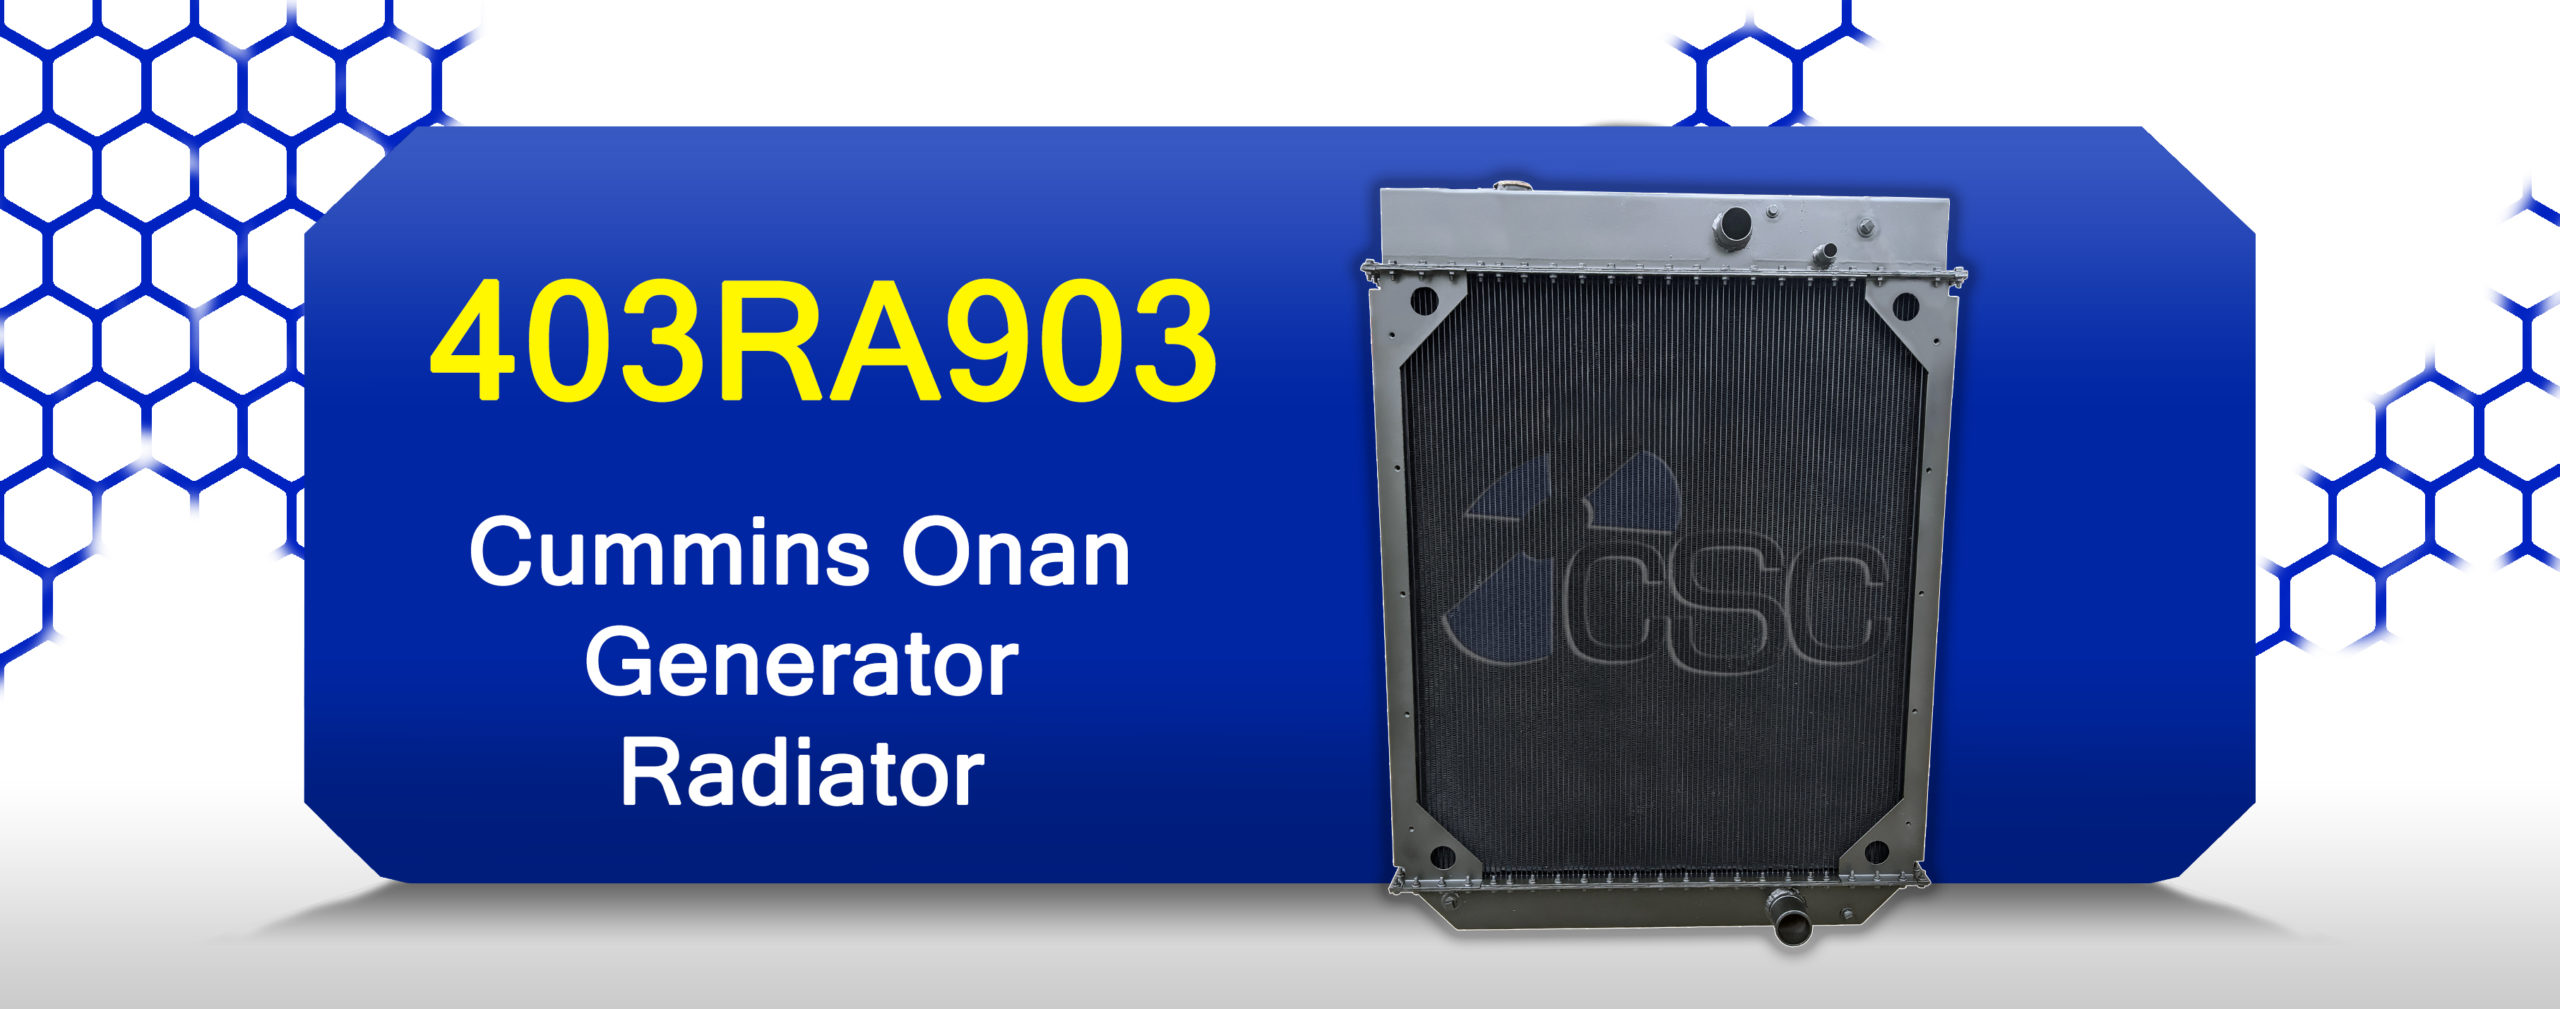 403RA903 radiator for 300kw Cummins Onan generator